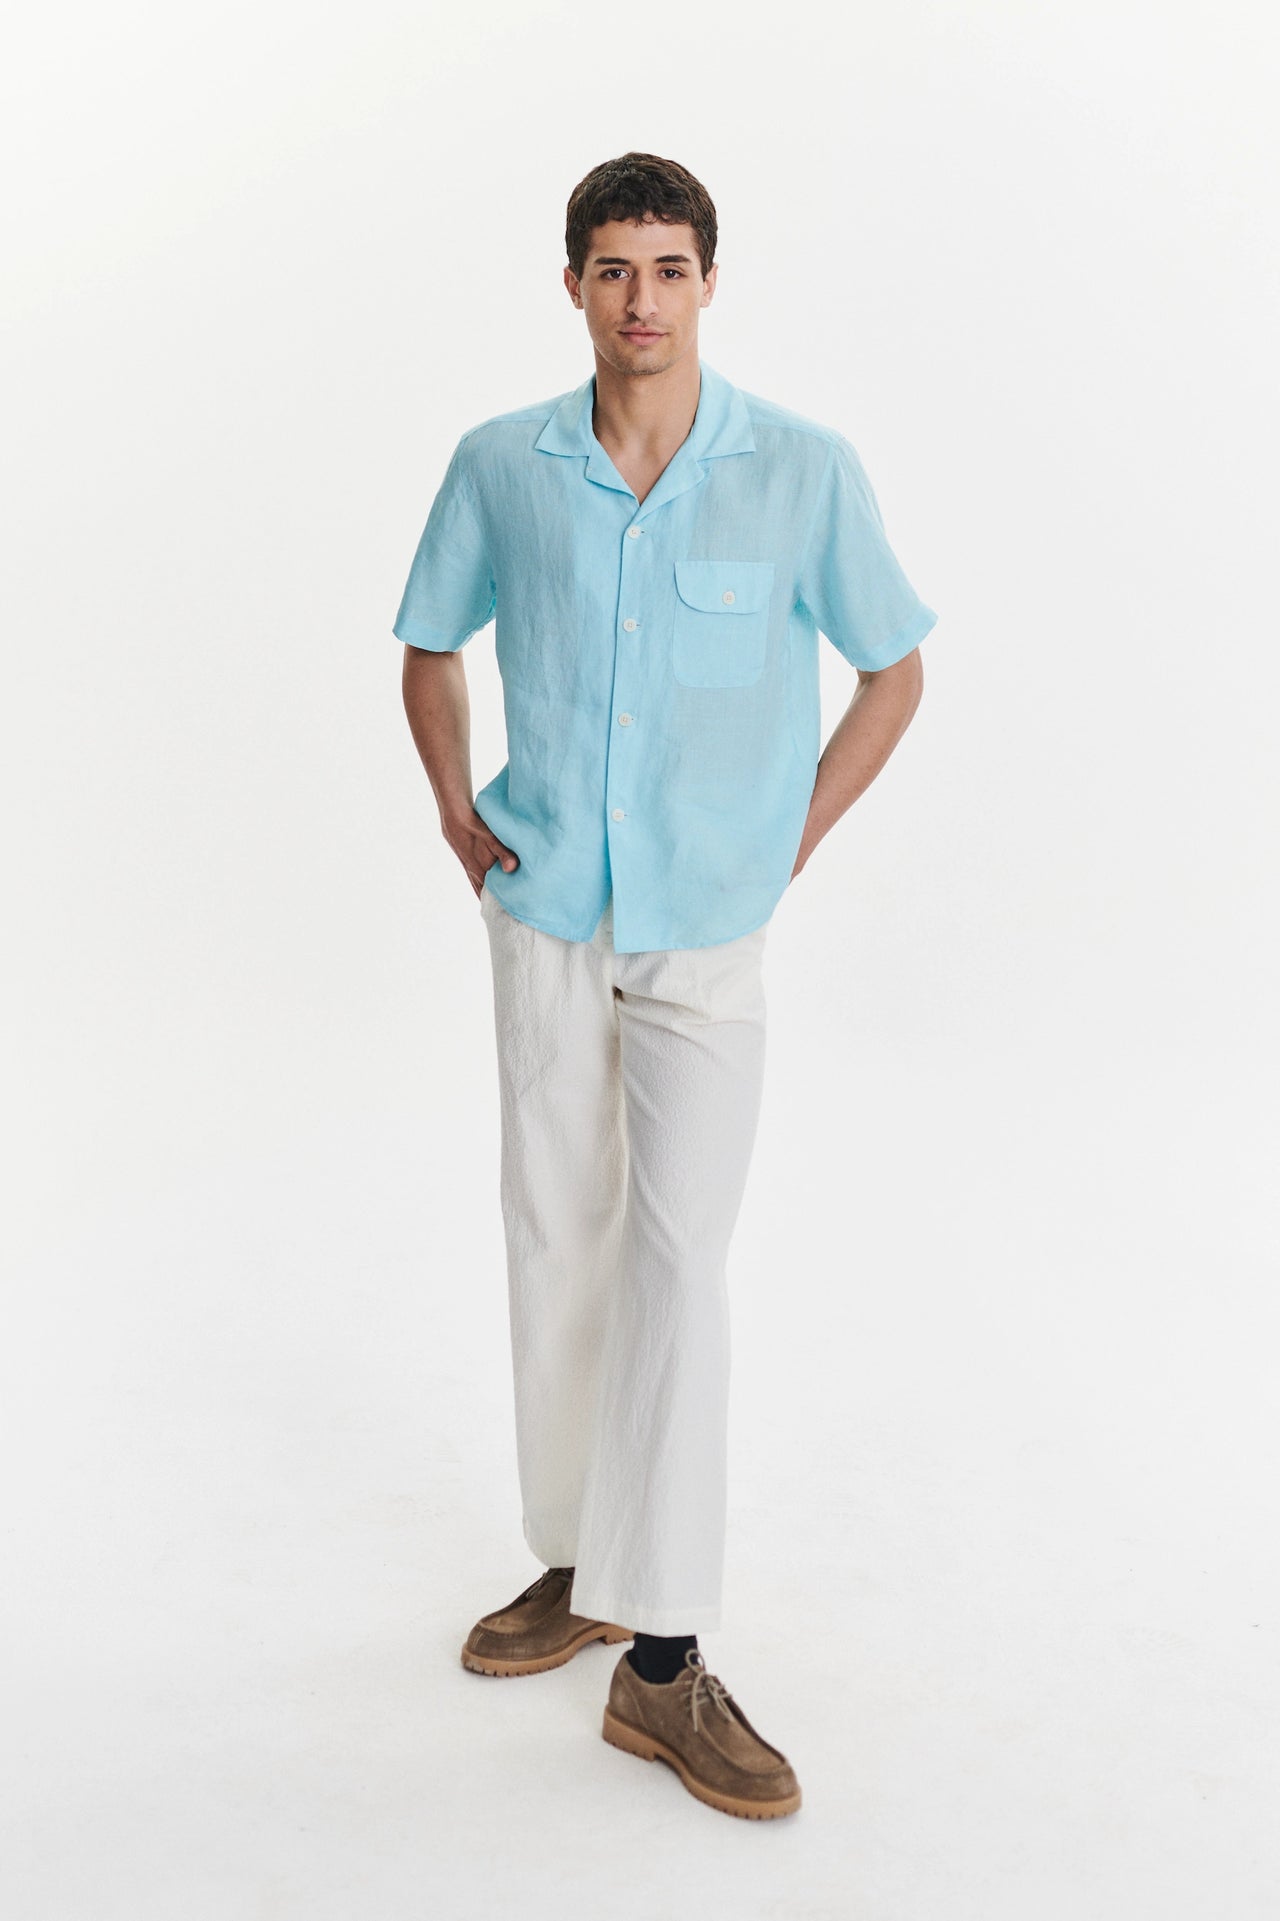 Short Sleeve Camp Collar Shirt in a Blue Turquoise Soft Italian Cotton Seersucker